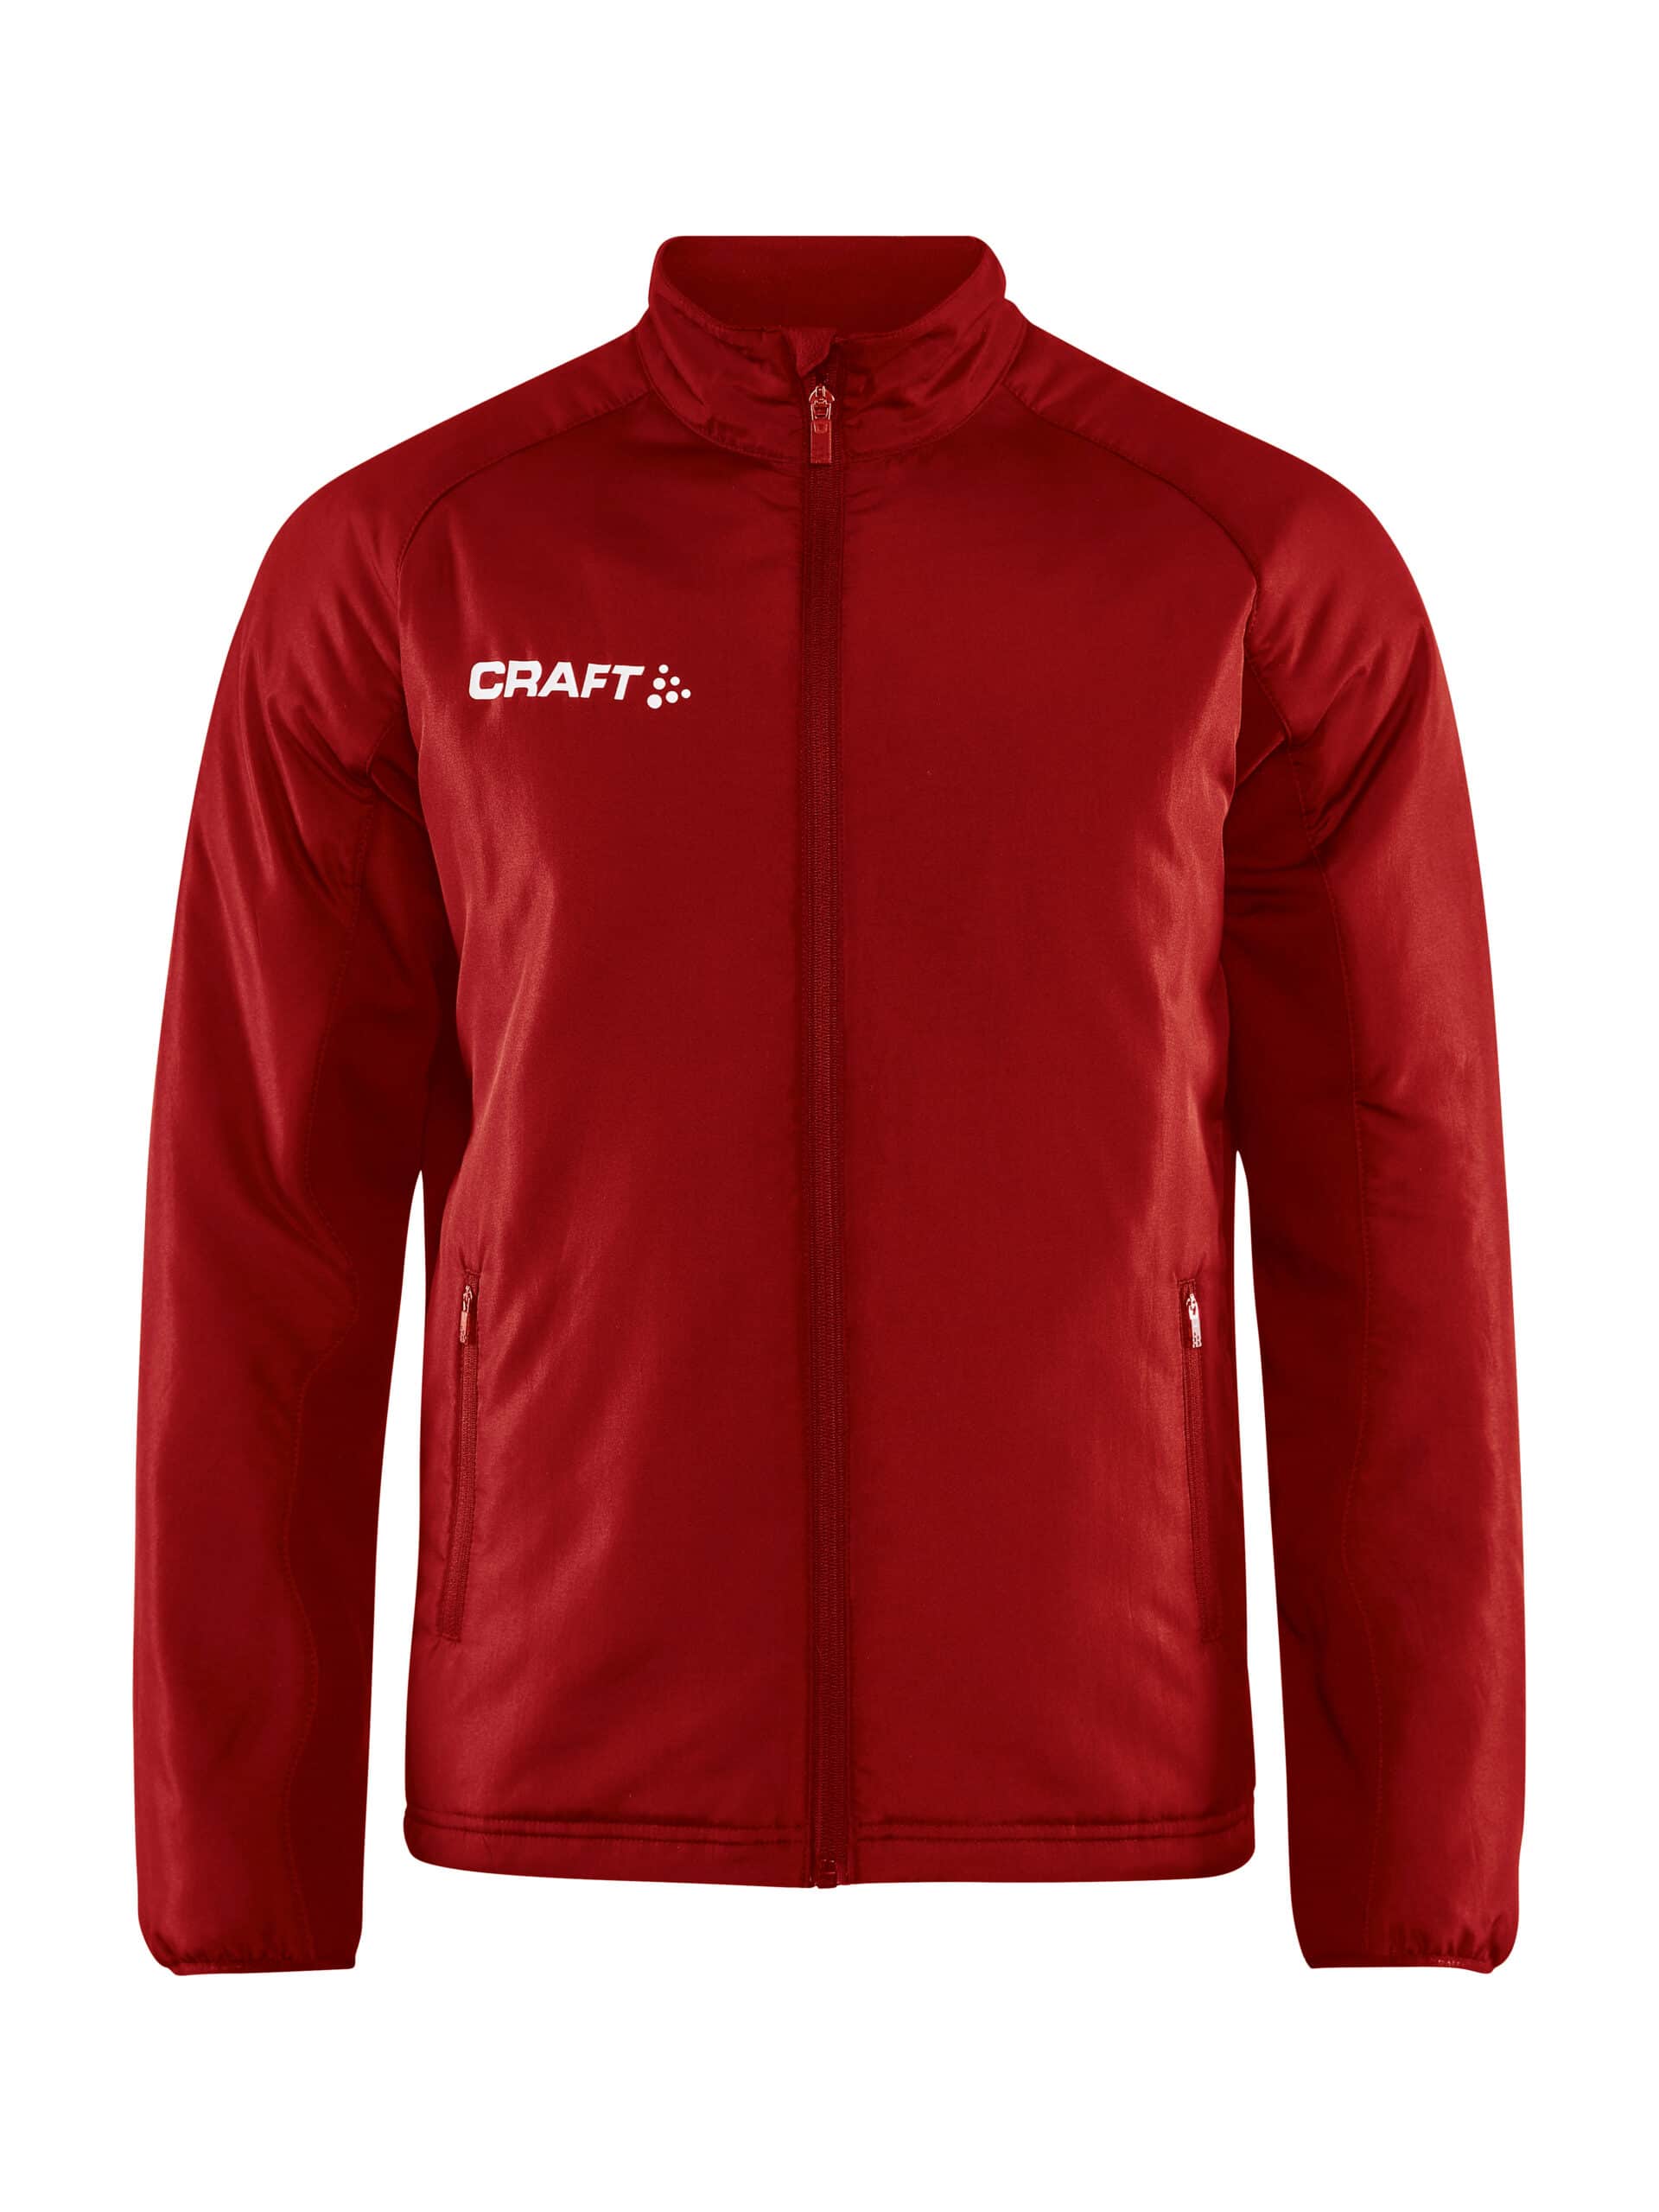 Craft - Jacket Warm JR - Bright Red 122/128